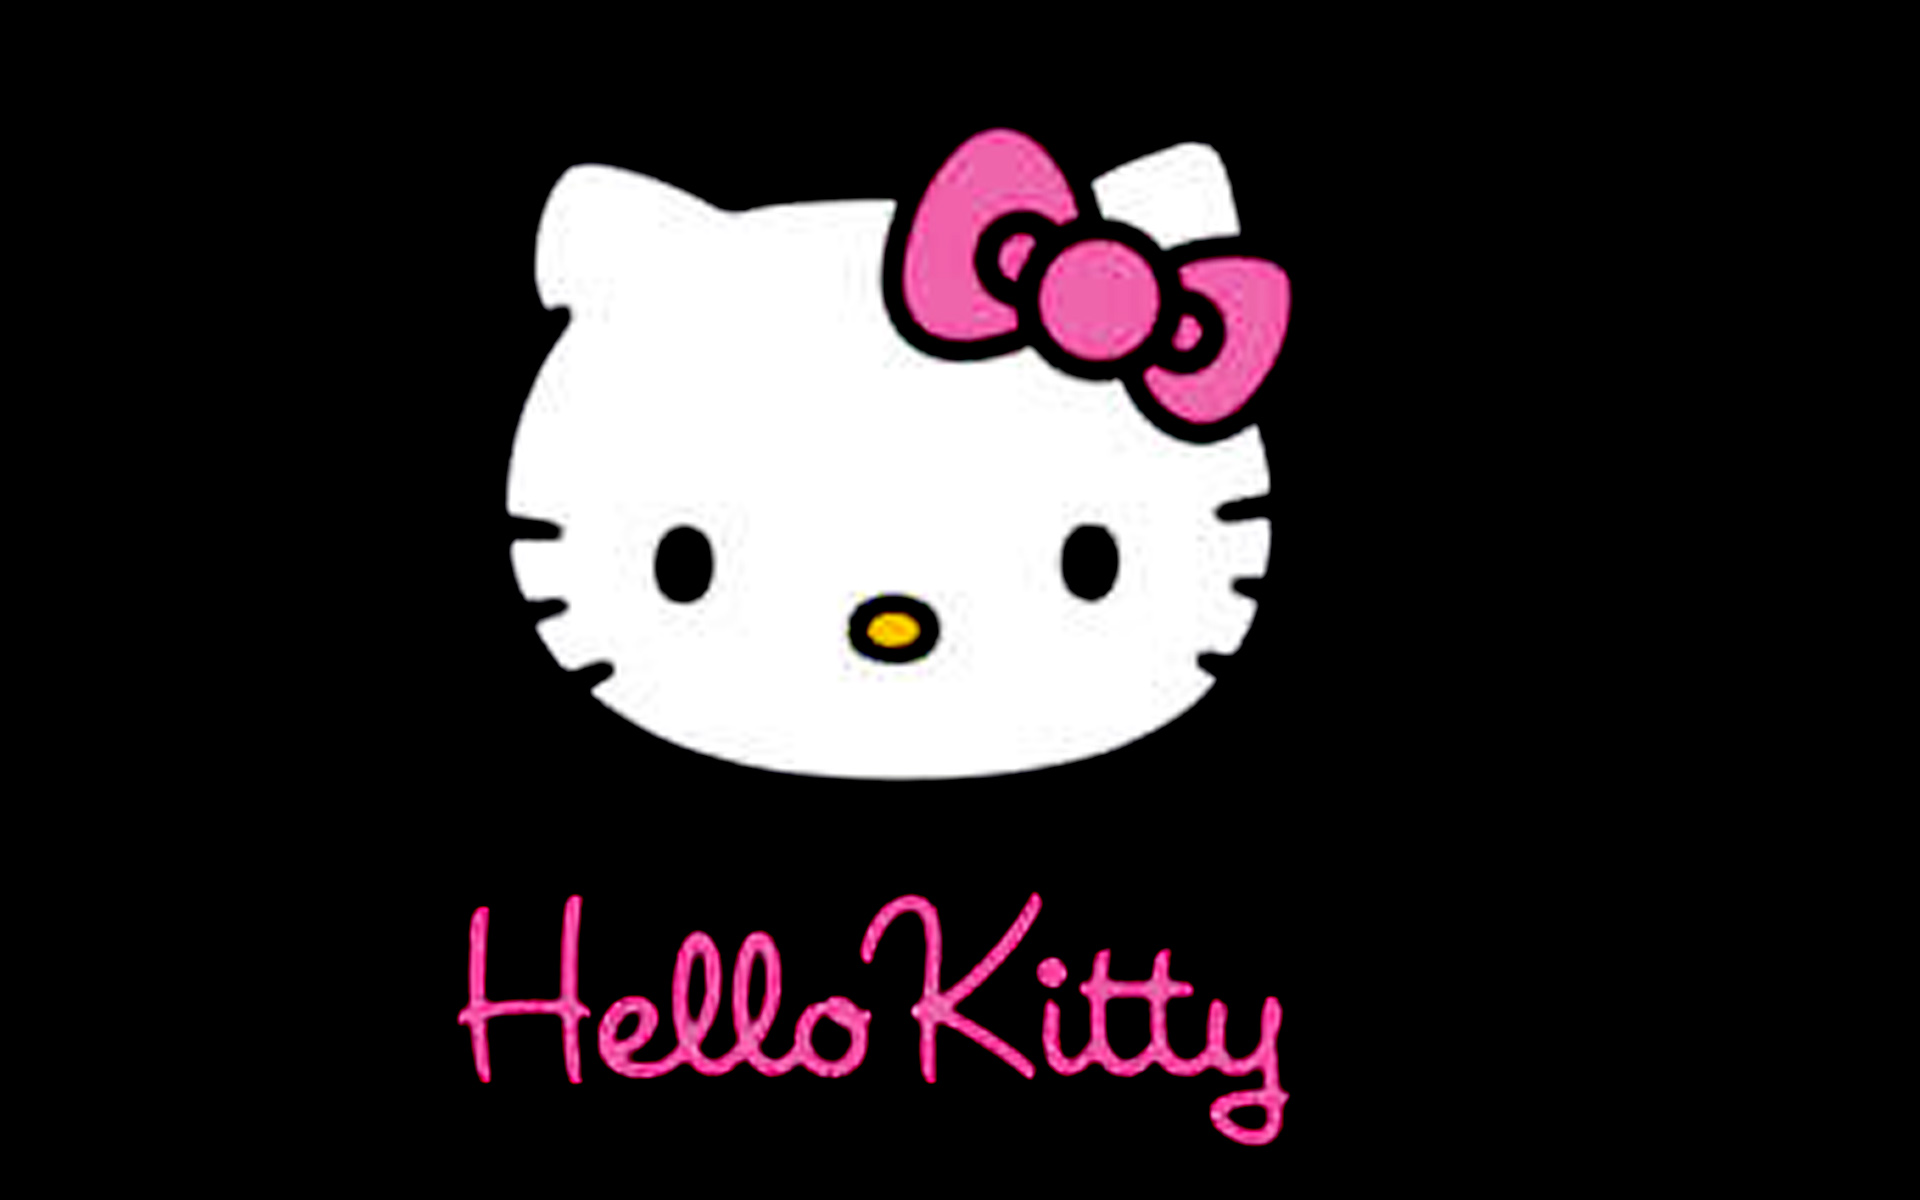  Hello Kitty Black Backgrounds hd wallpaper background desktop